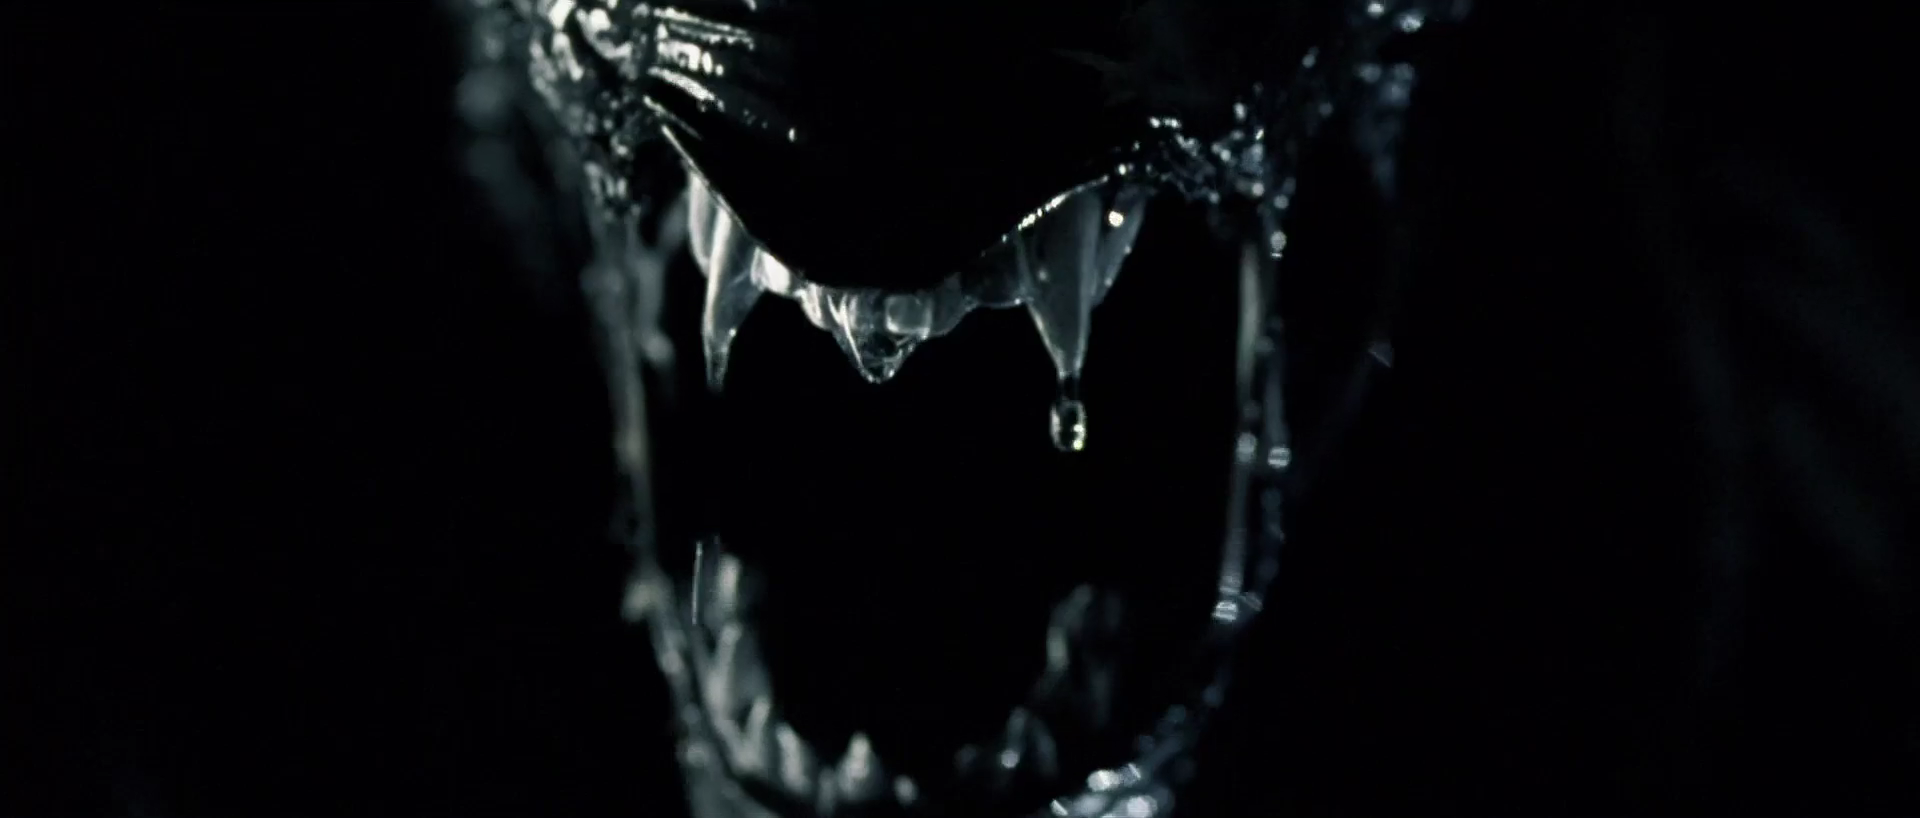 AVP.Alien.vs.Predator.2004.UNRATED.1080p.BluRay.H264.AAC-RARBG.mp4_003589597.png